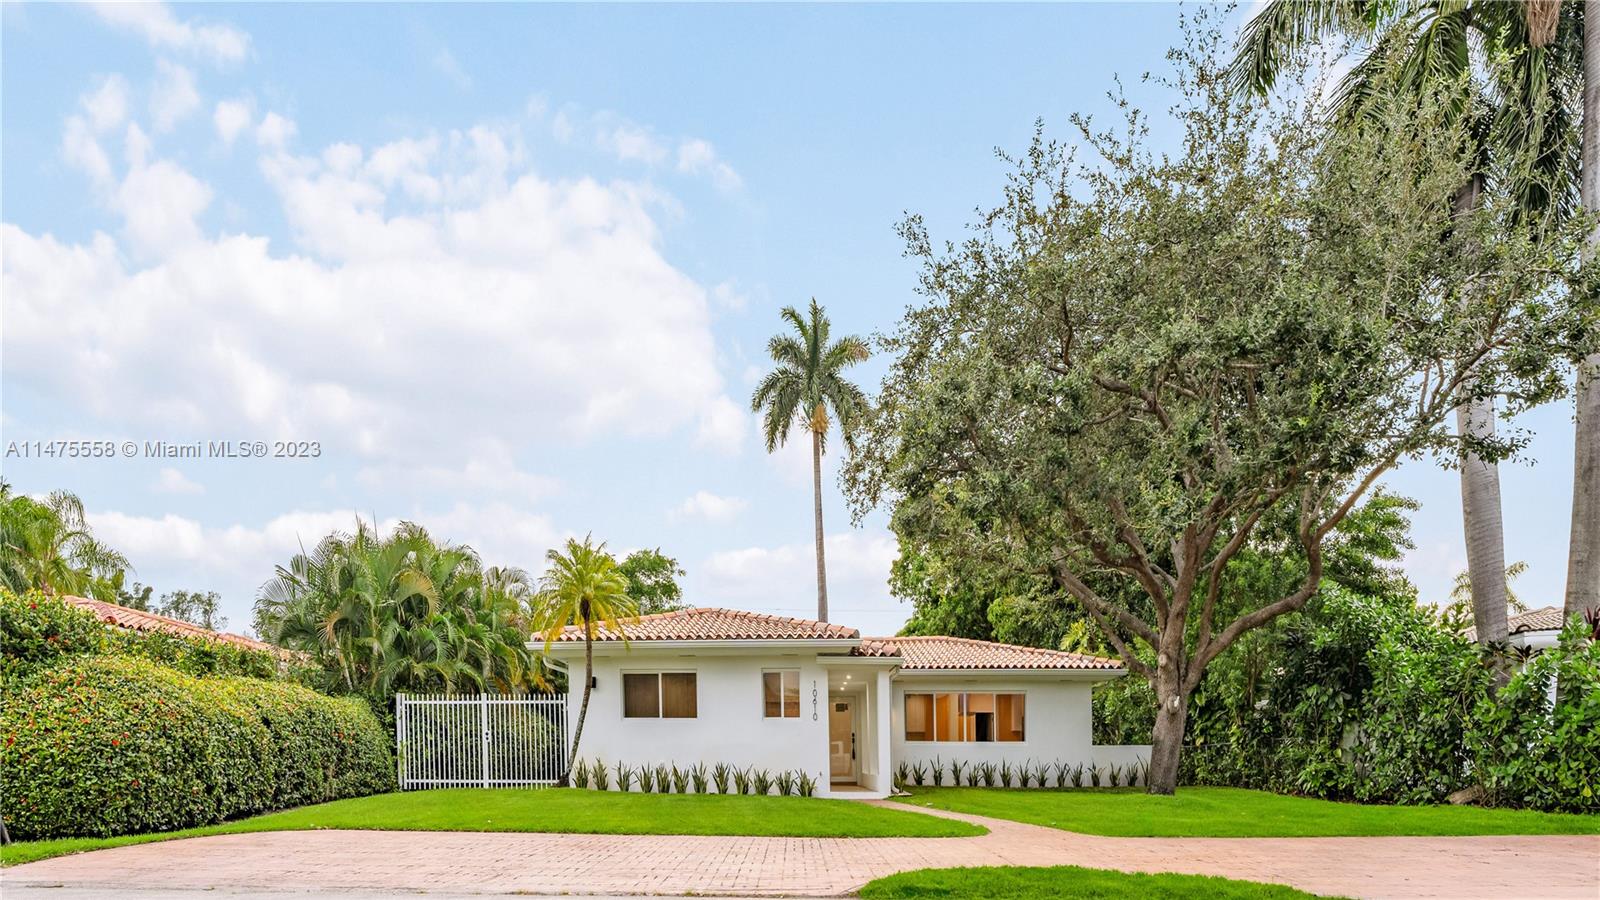 Property for Sale at 10610 Ne 10th Pl, Miami Shores, Miami-Dade County, Florida - Bedrooms: 3 
Bathrooms: 3  - $1,550,000